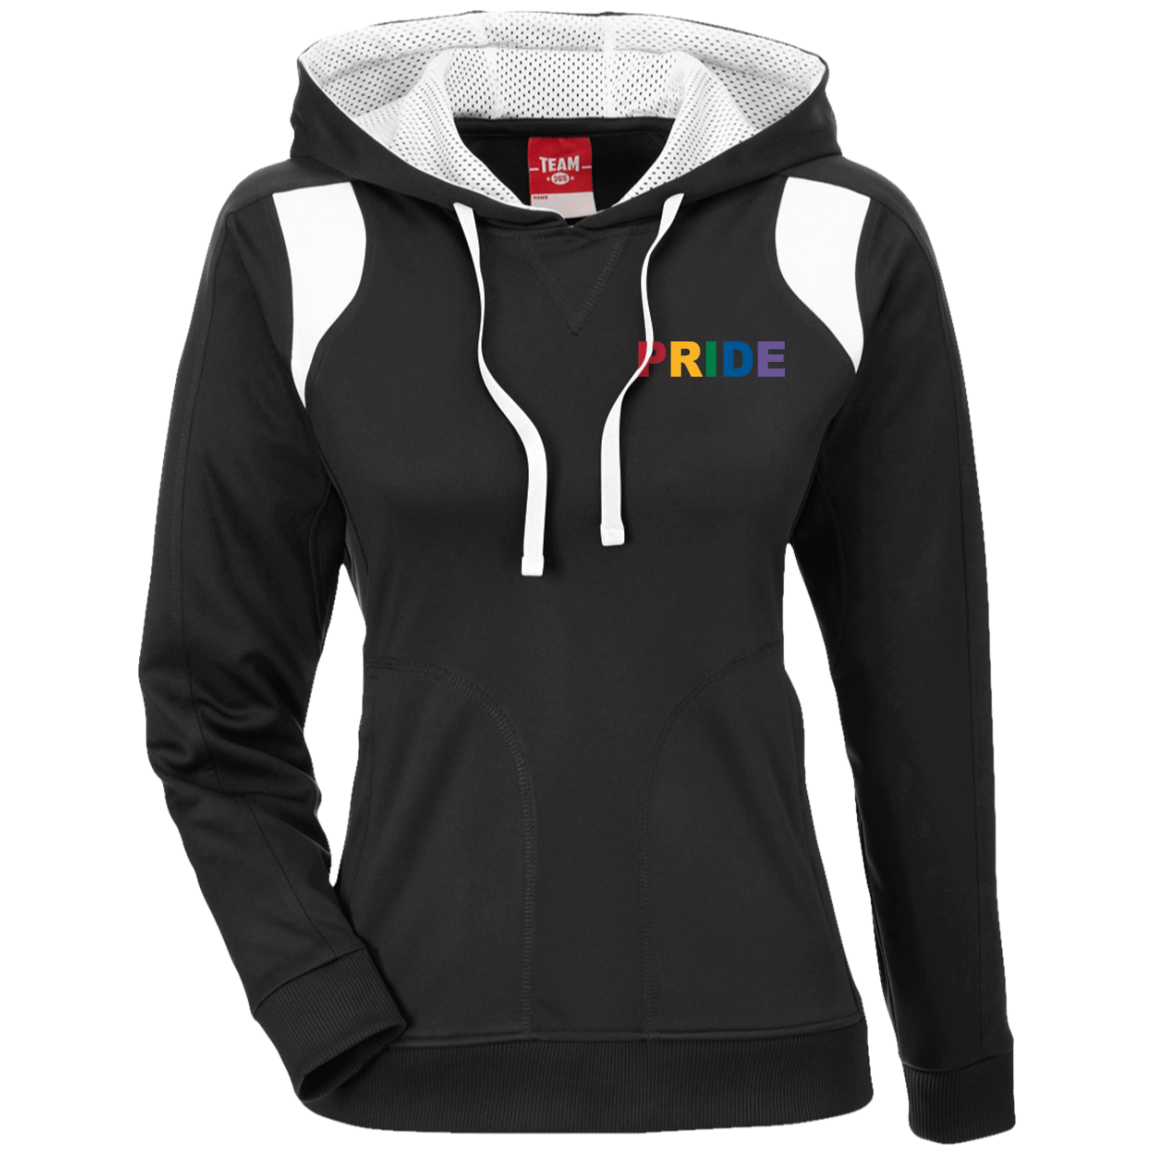 Best LGBT Pride Sweatshirts for Men & Women